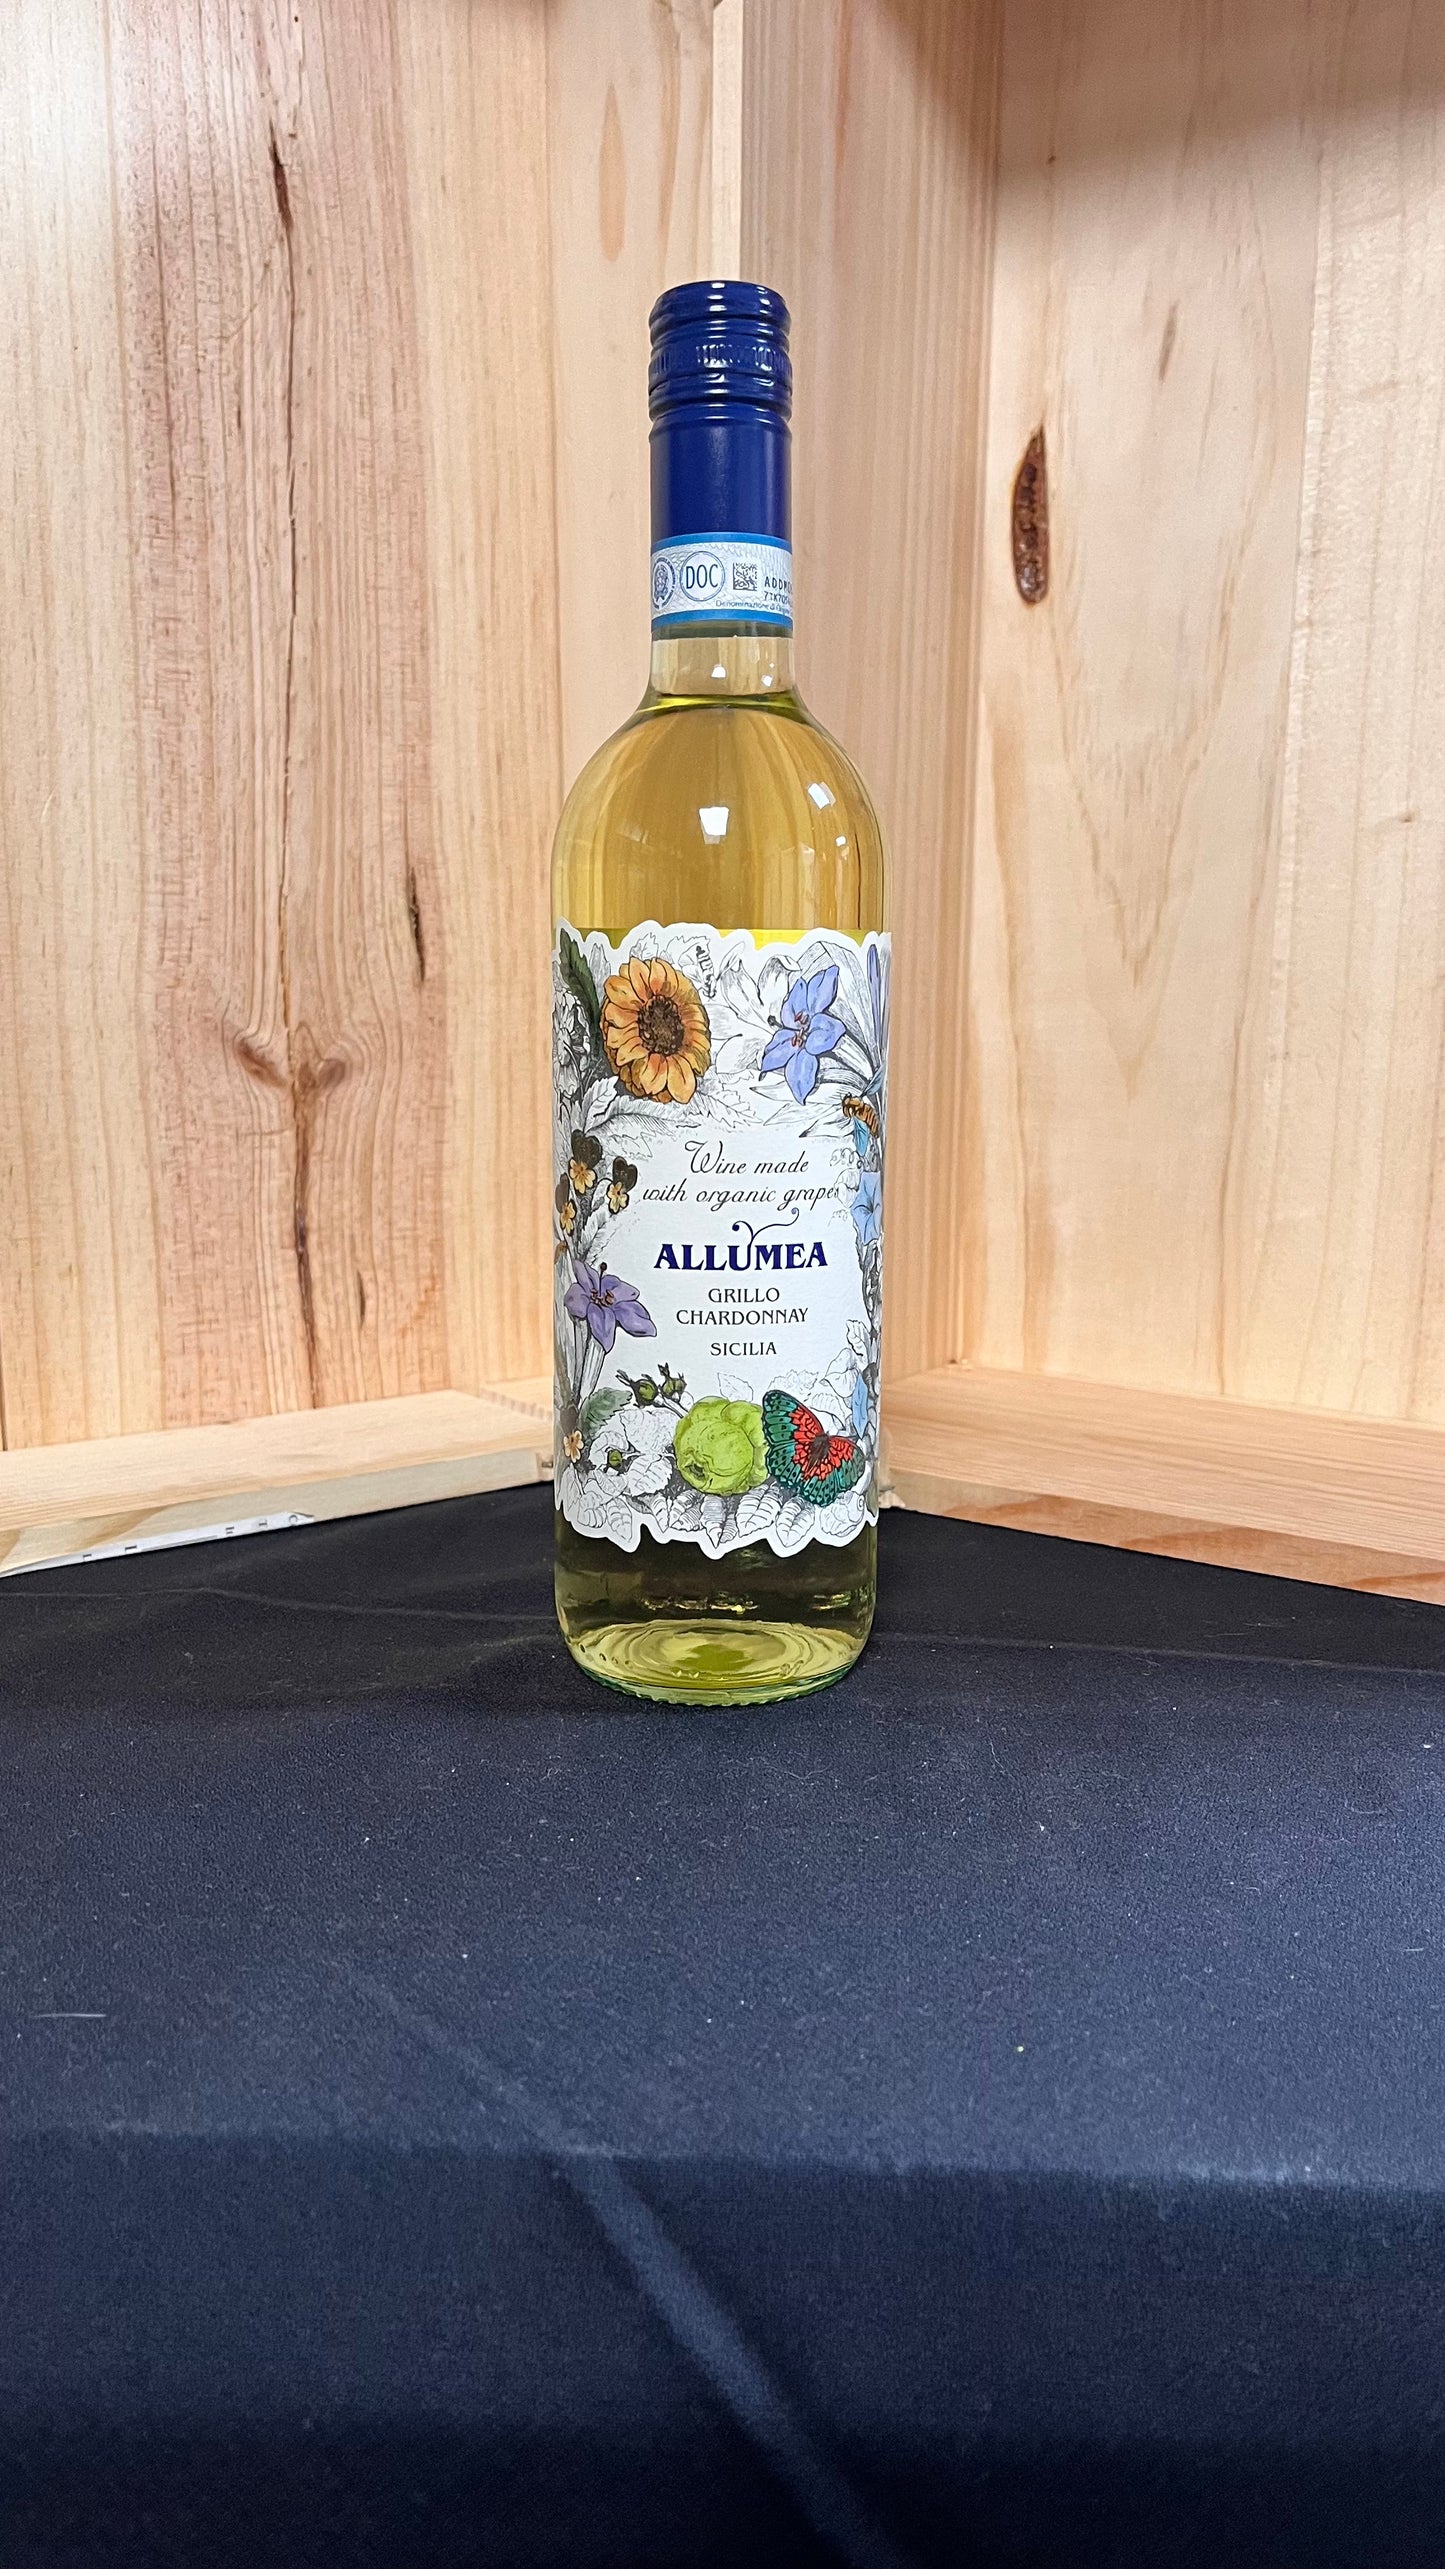 2022 - Allumea Organic Blend - White   Grillo Chardonnay